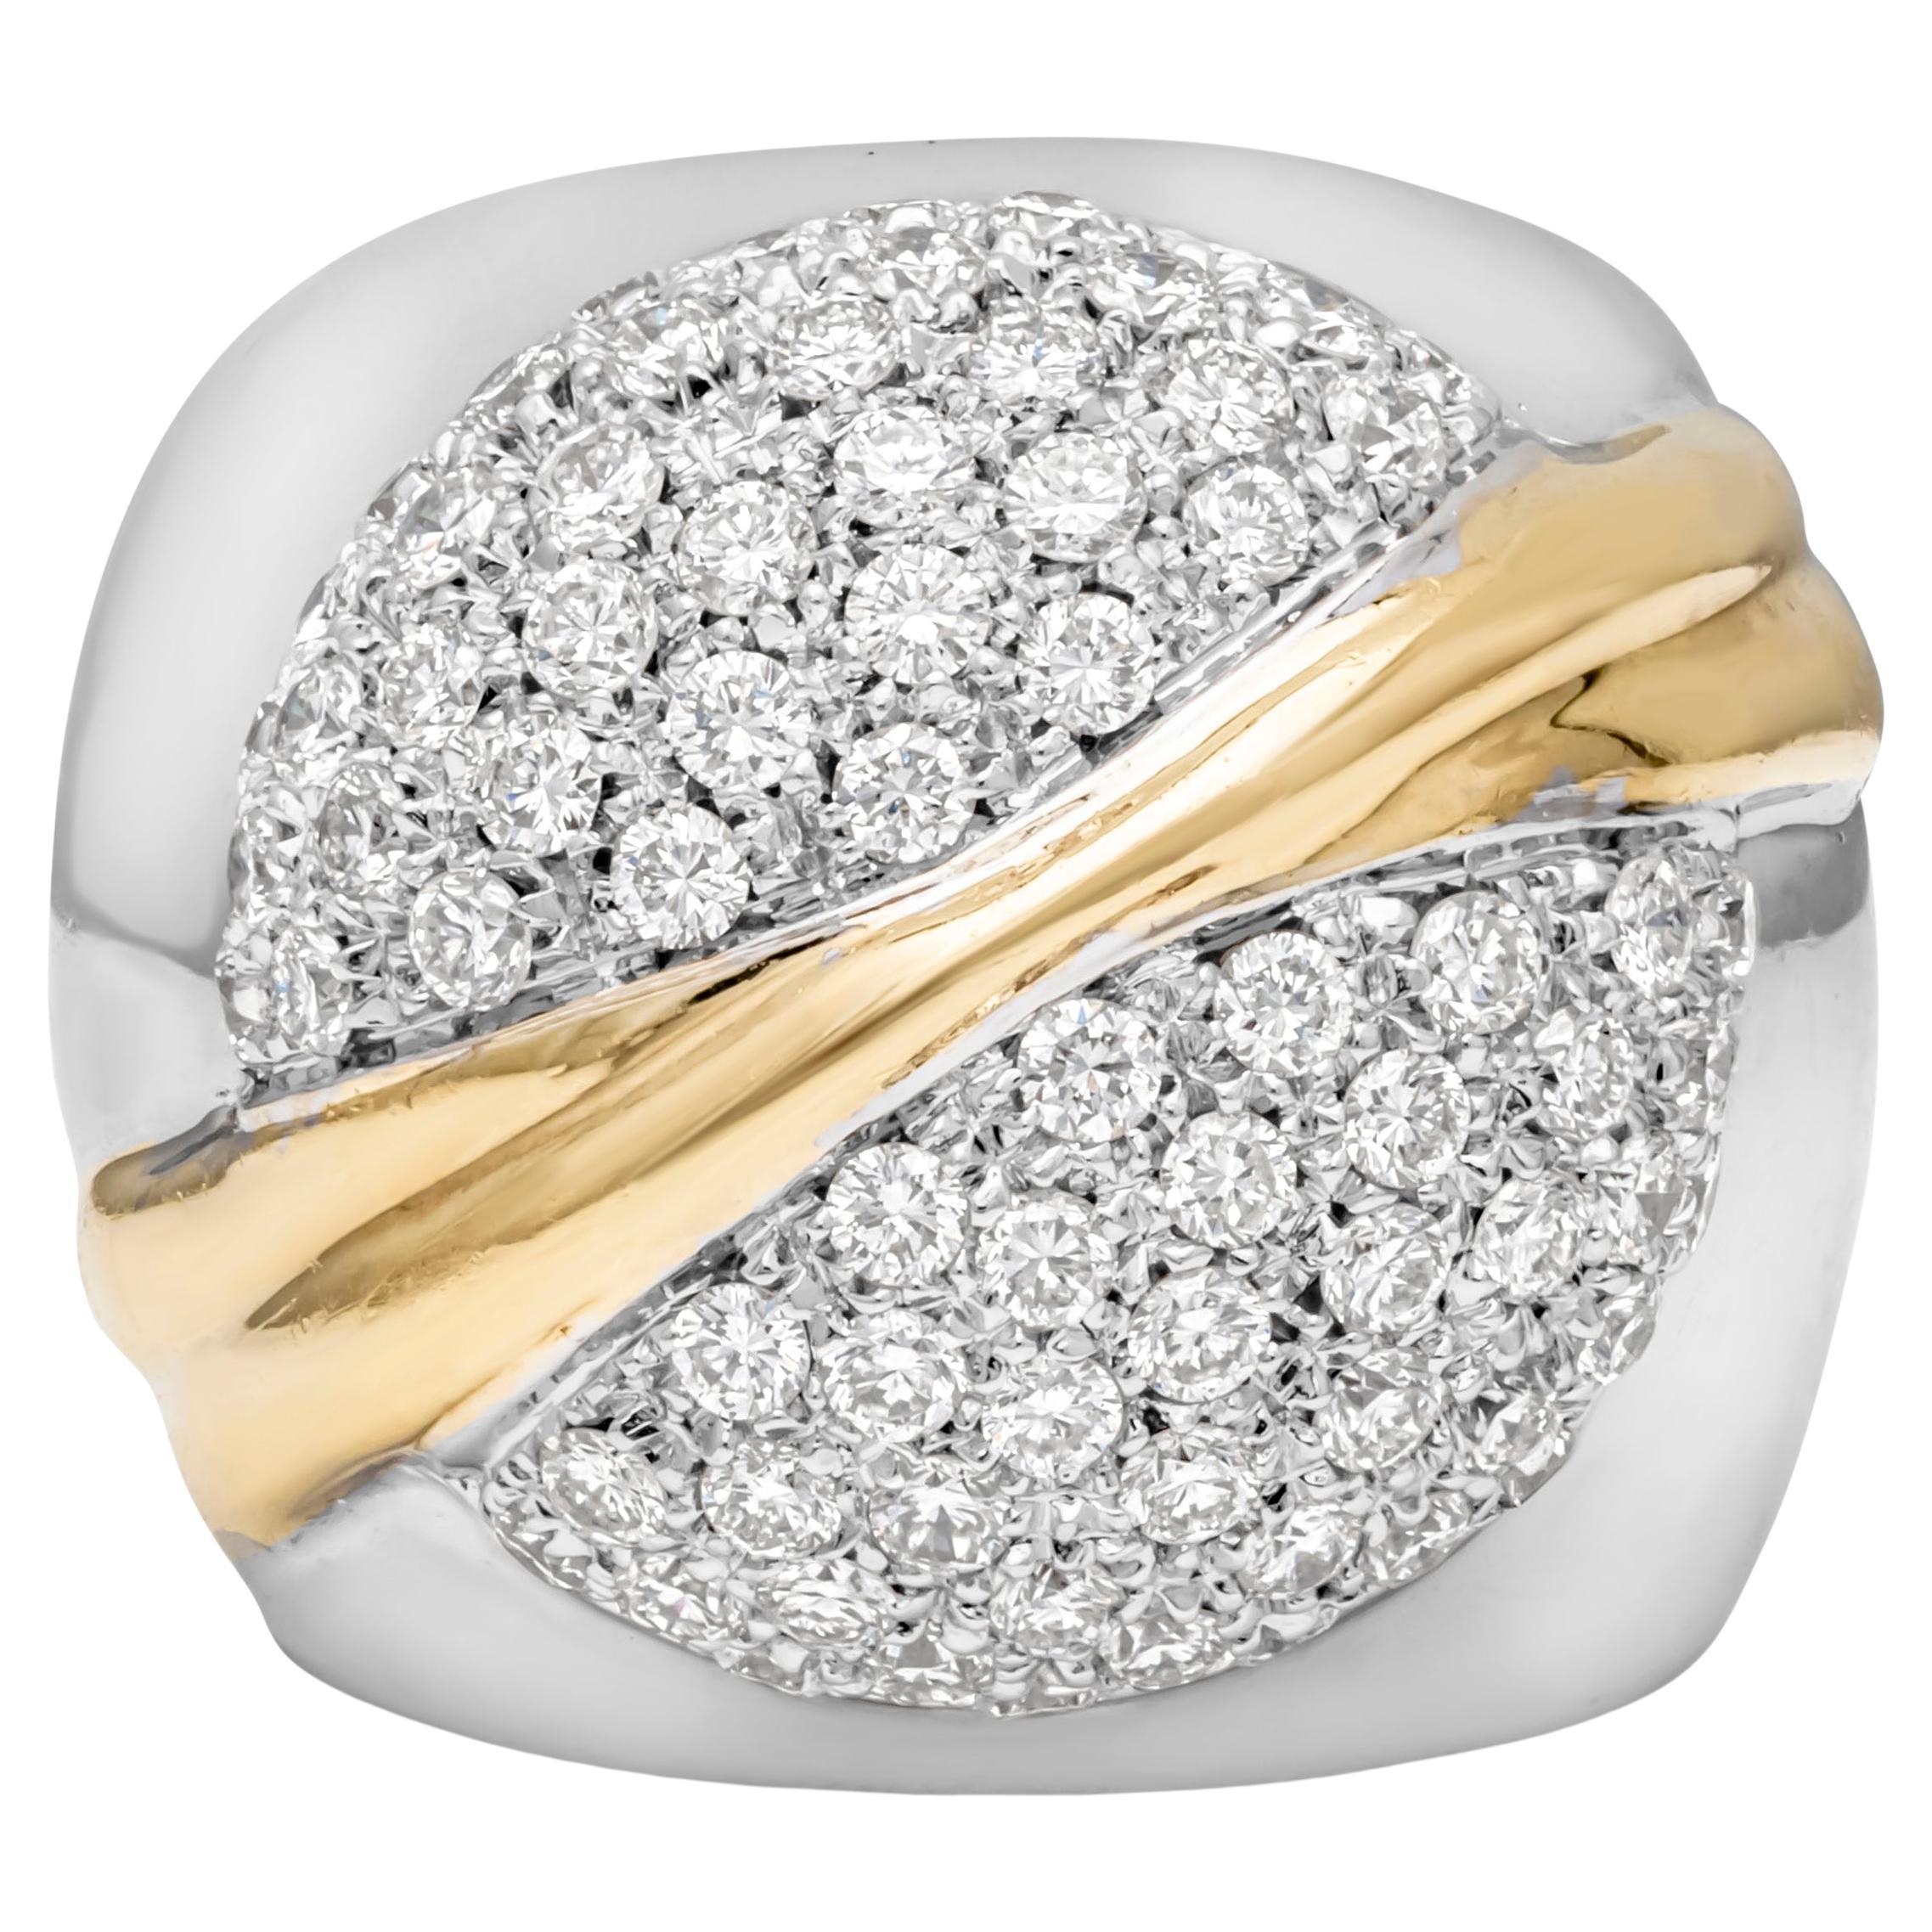 Roman Malakov Diamonds 3.06 Carats Total Round Brilliant Cut Diamond Wide Fashion Ring